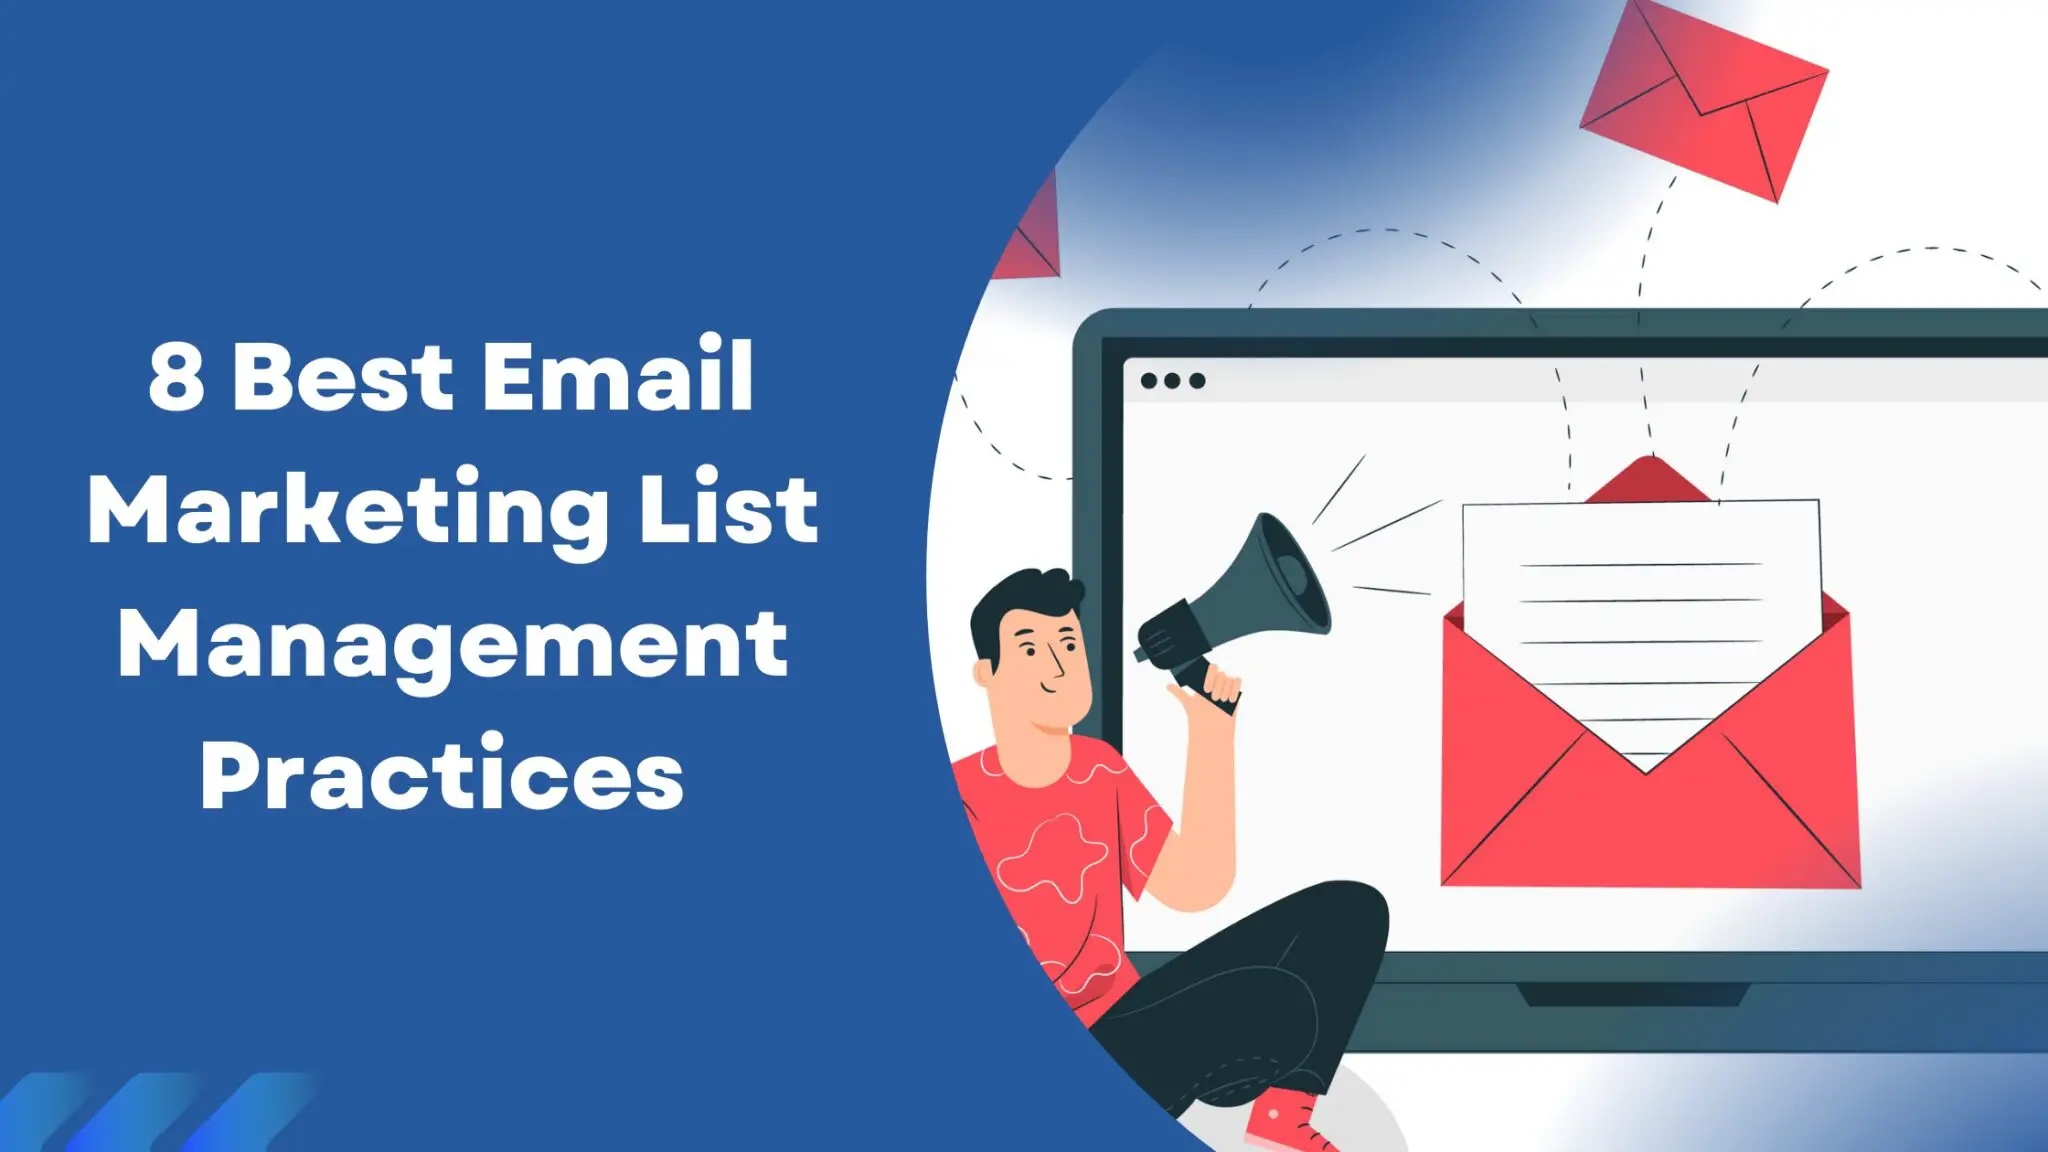 8 Best Email Marketing List Management Practices (1)-0104510c